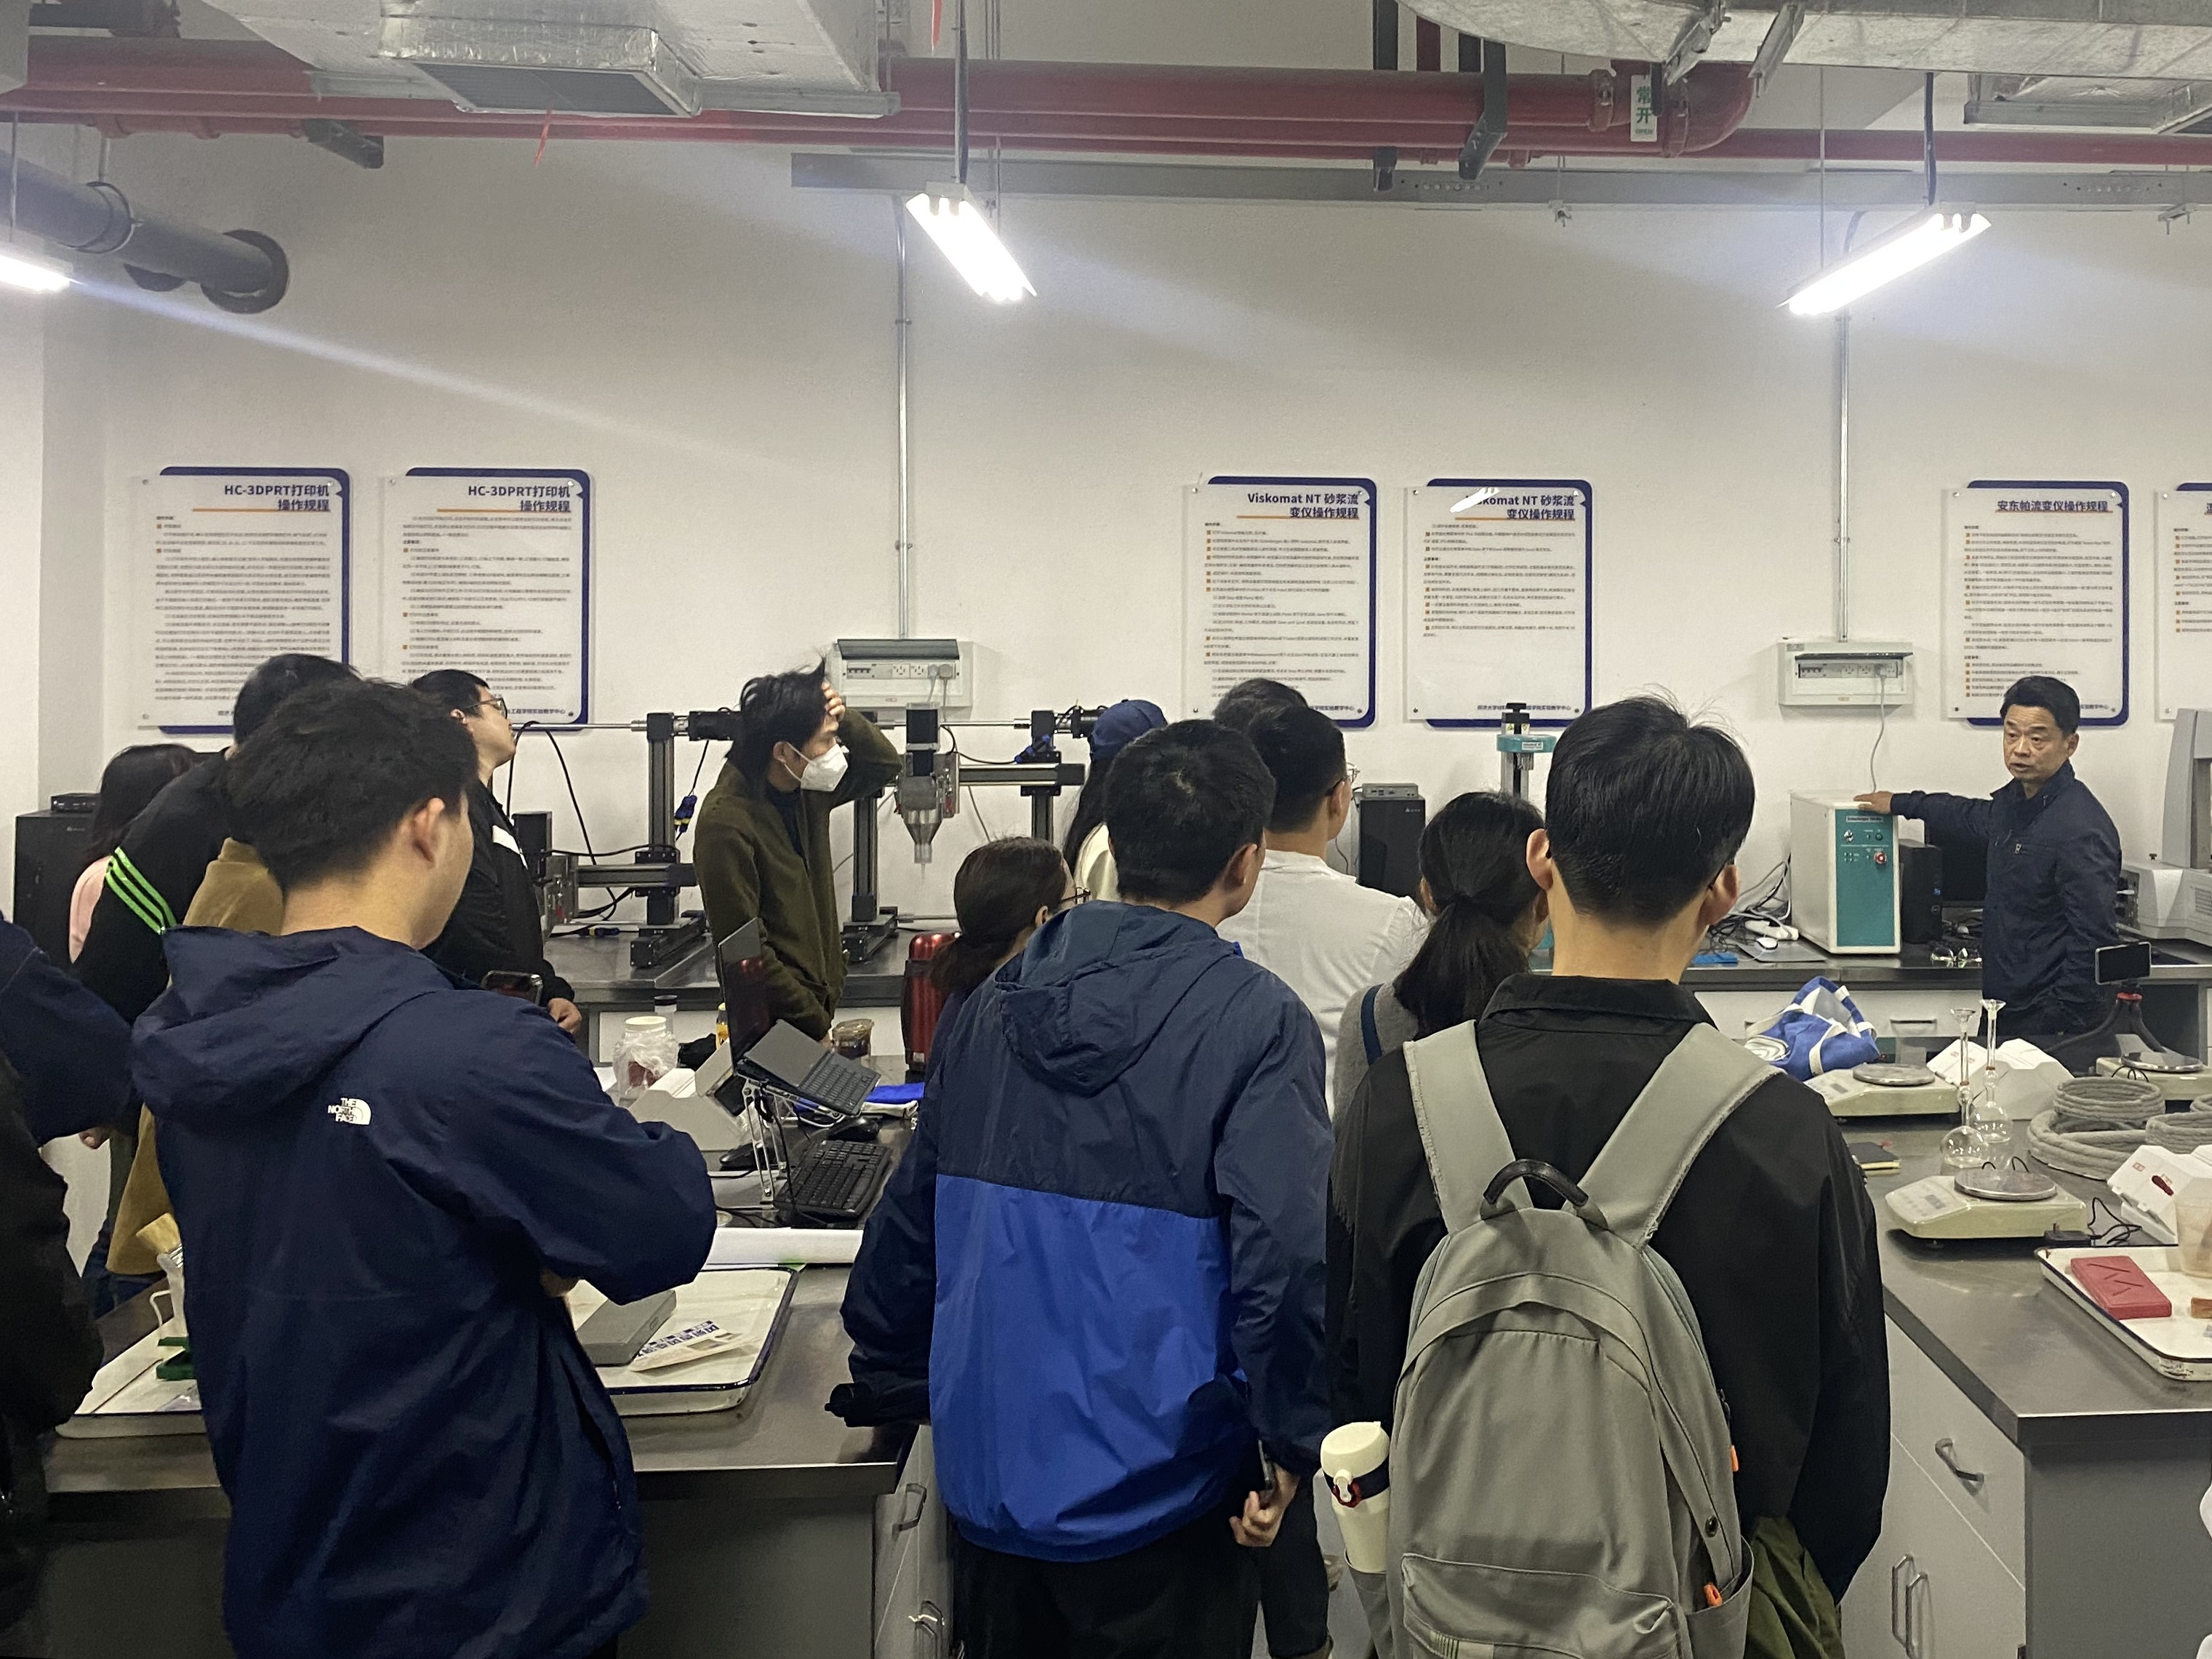 Viskomat NT training in the Tongji University, Shanghai, PRC 3D lab